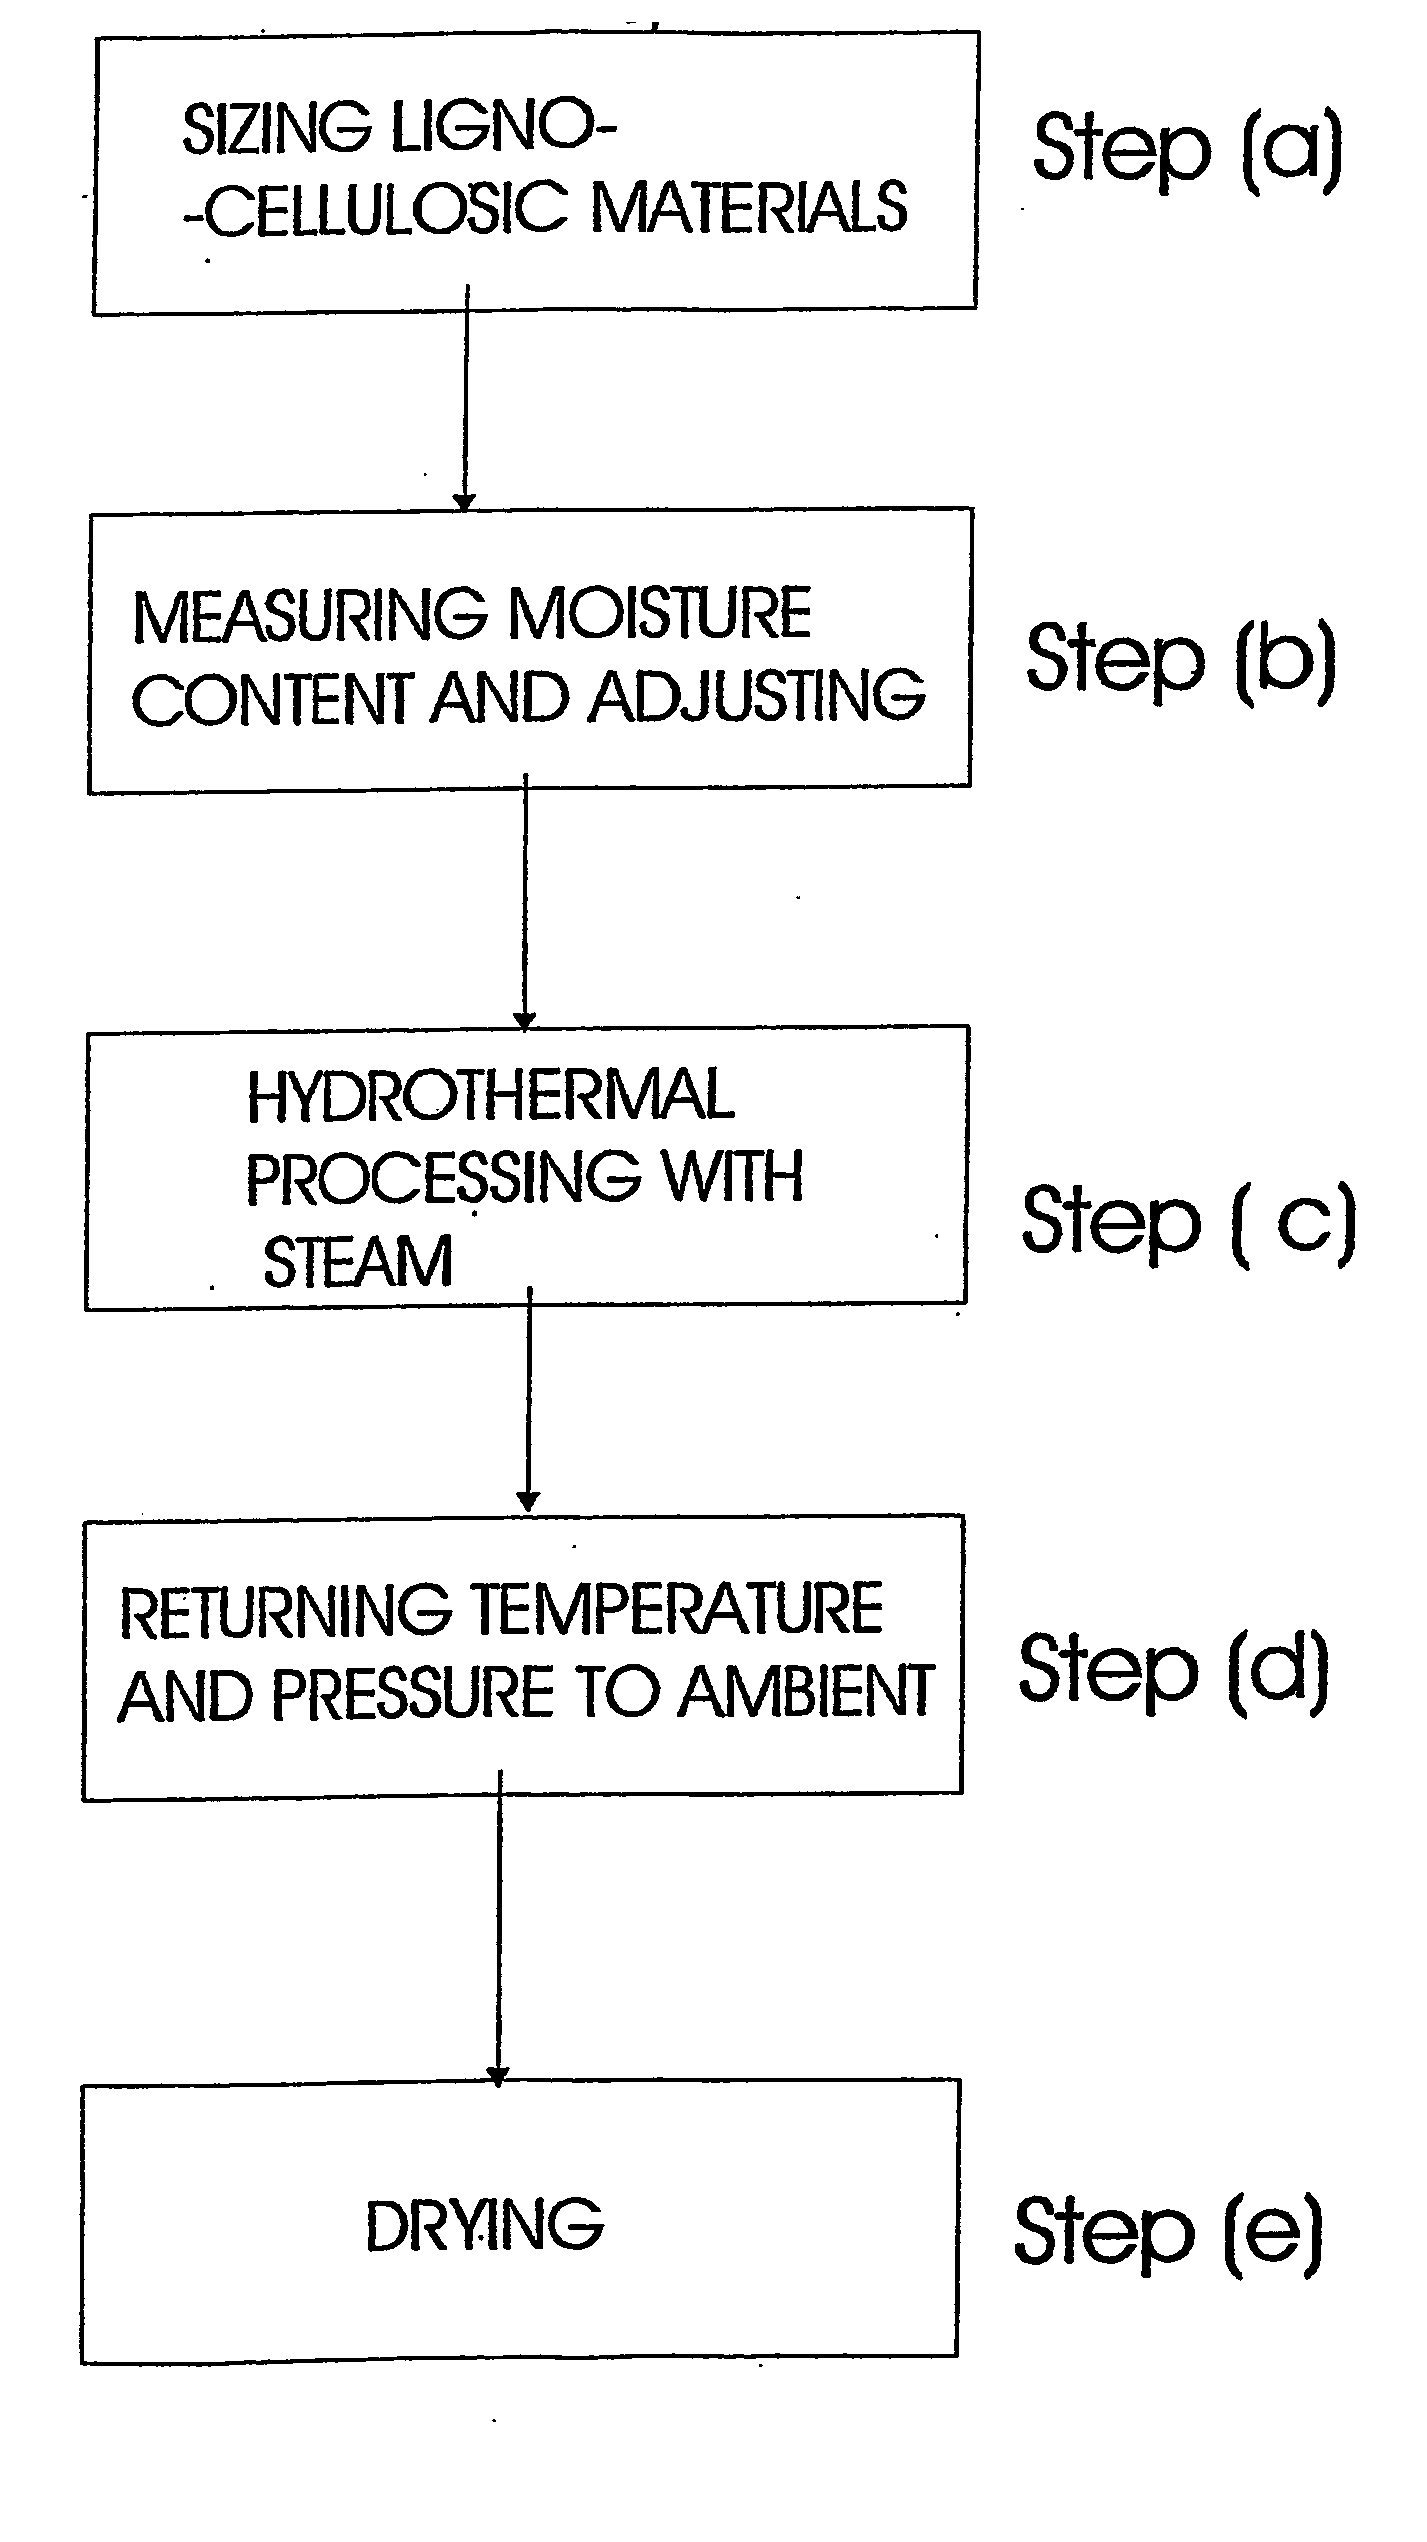 Processing of ligno-cellulose materials